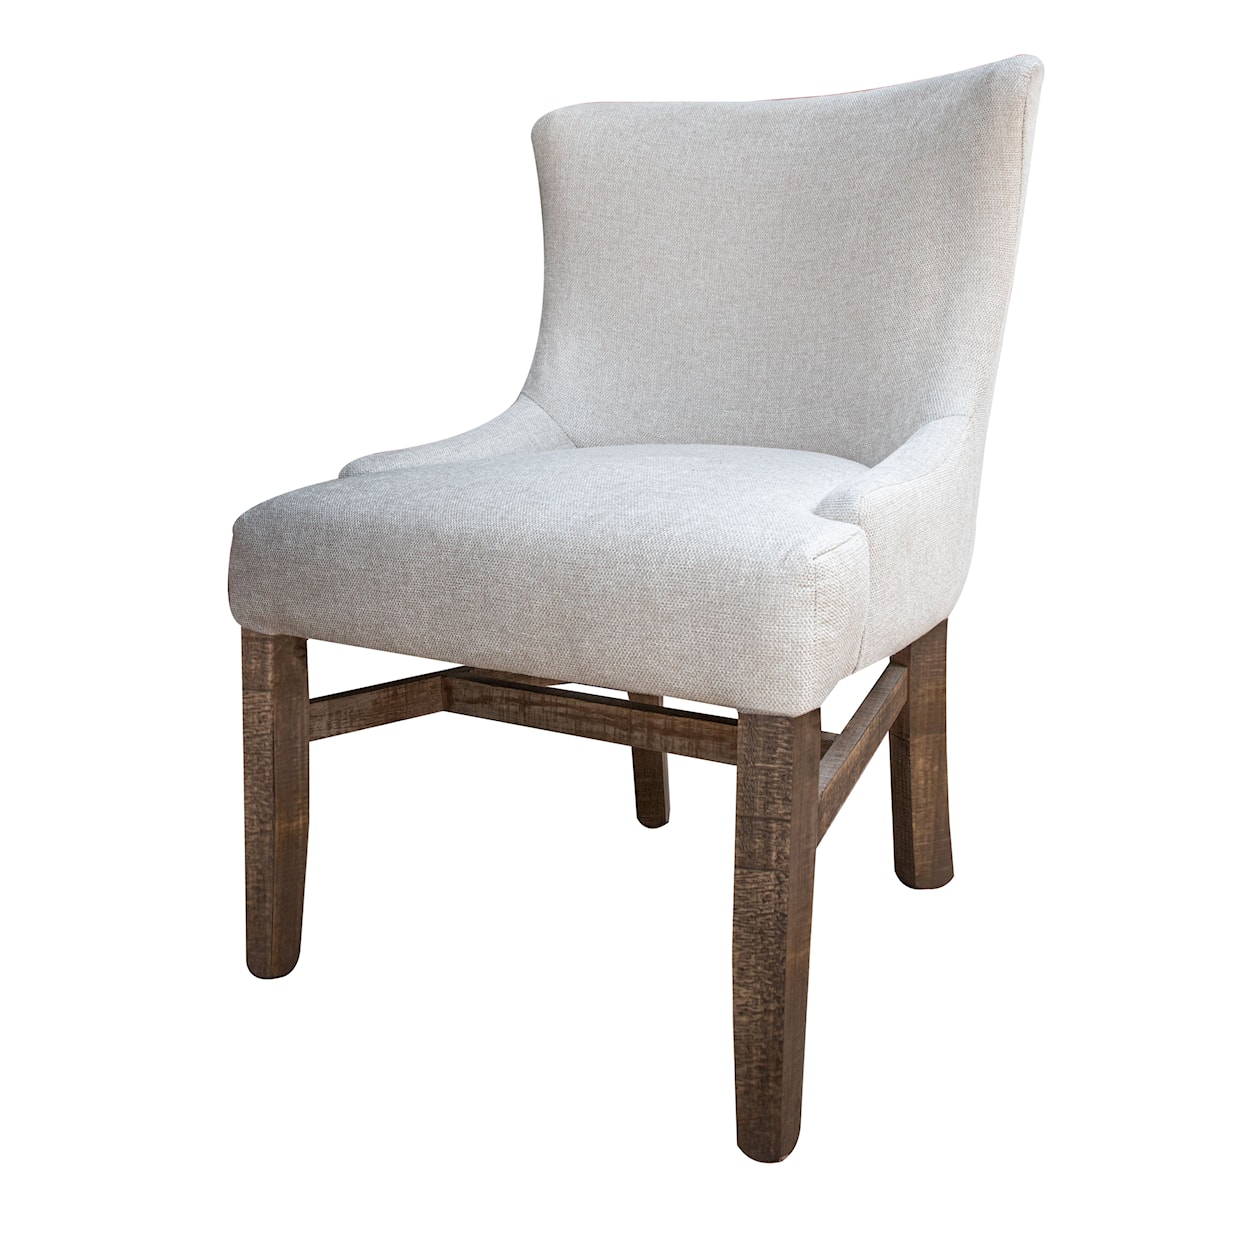 International Furniture Direct Aruba Chair